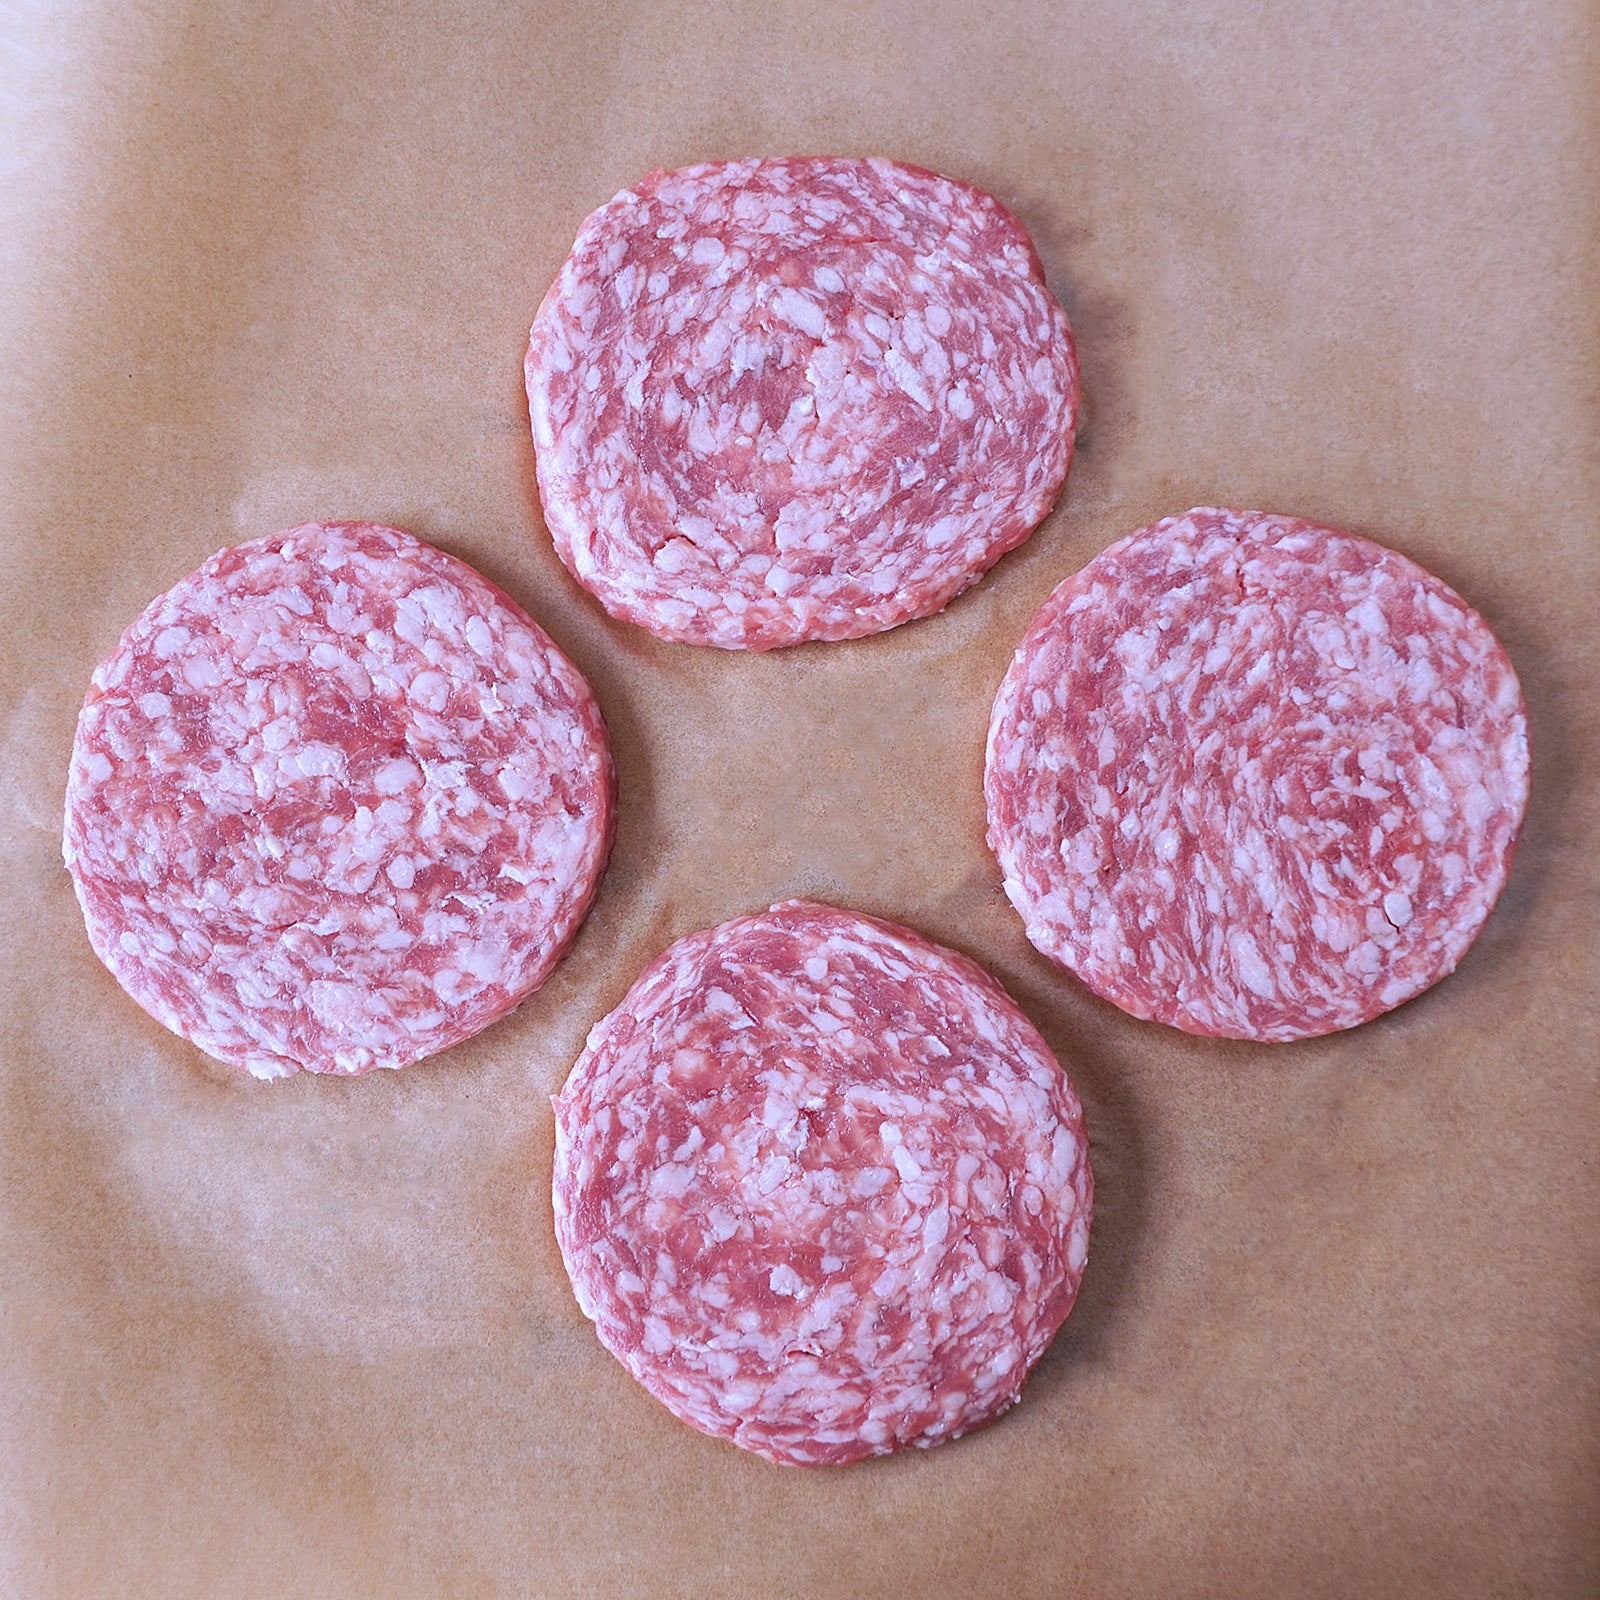 All-Natural Free-Range Kurobuta Pork Burgers from Iowa (4pc) - Horizon Farms